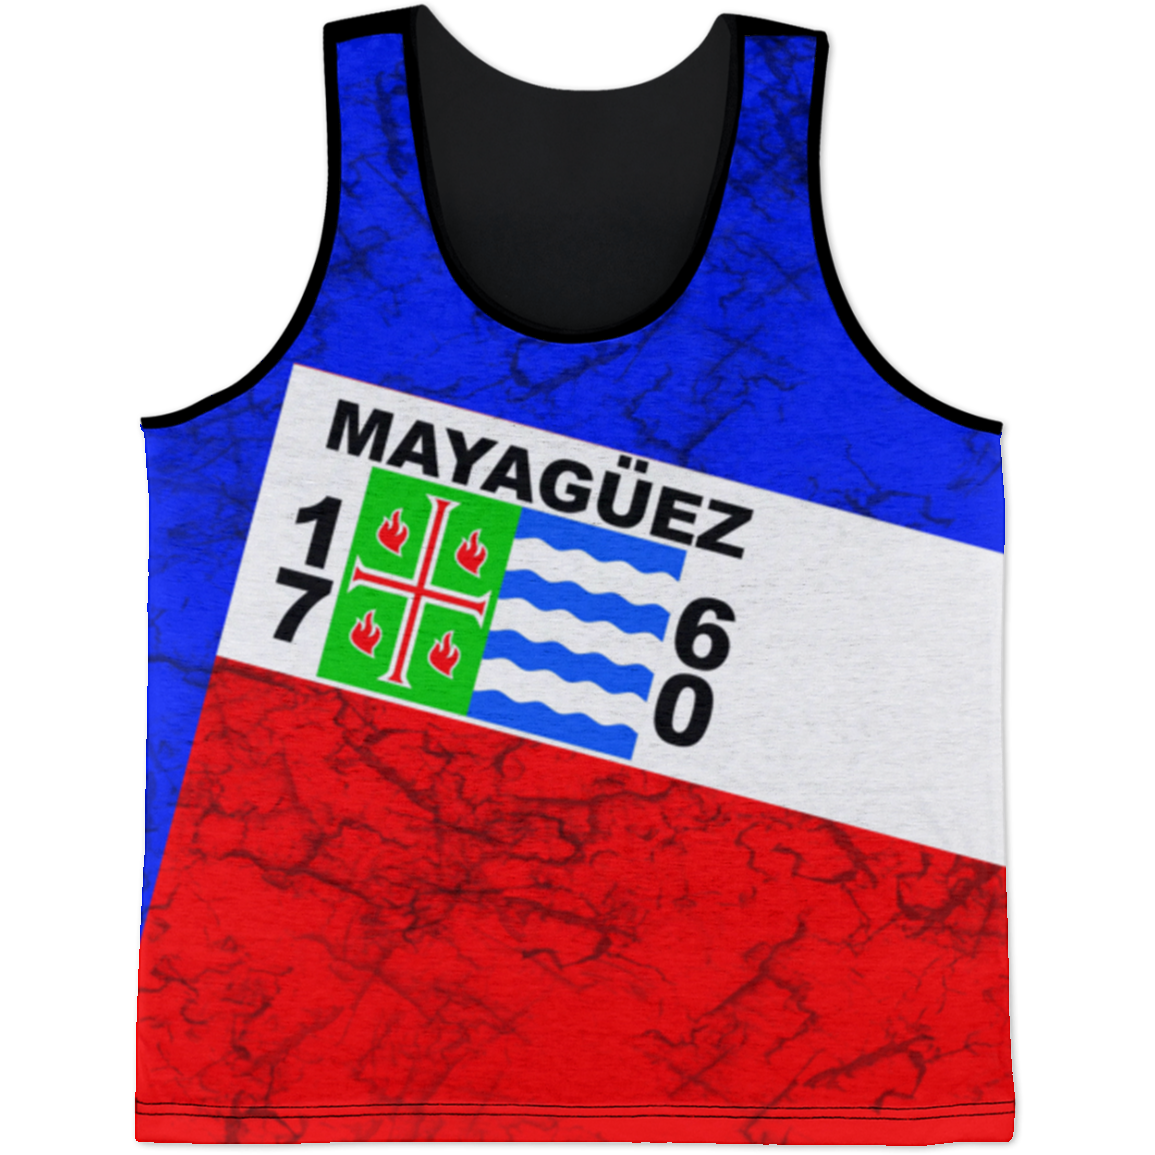 Mayaguez Tank Top - XL ONLY